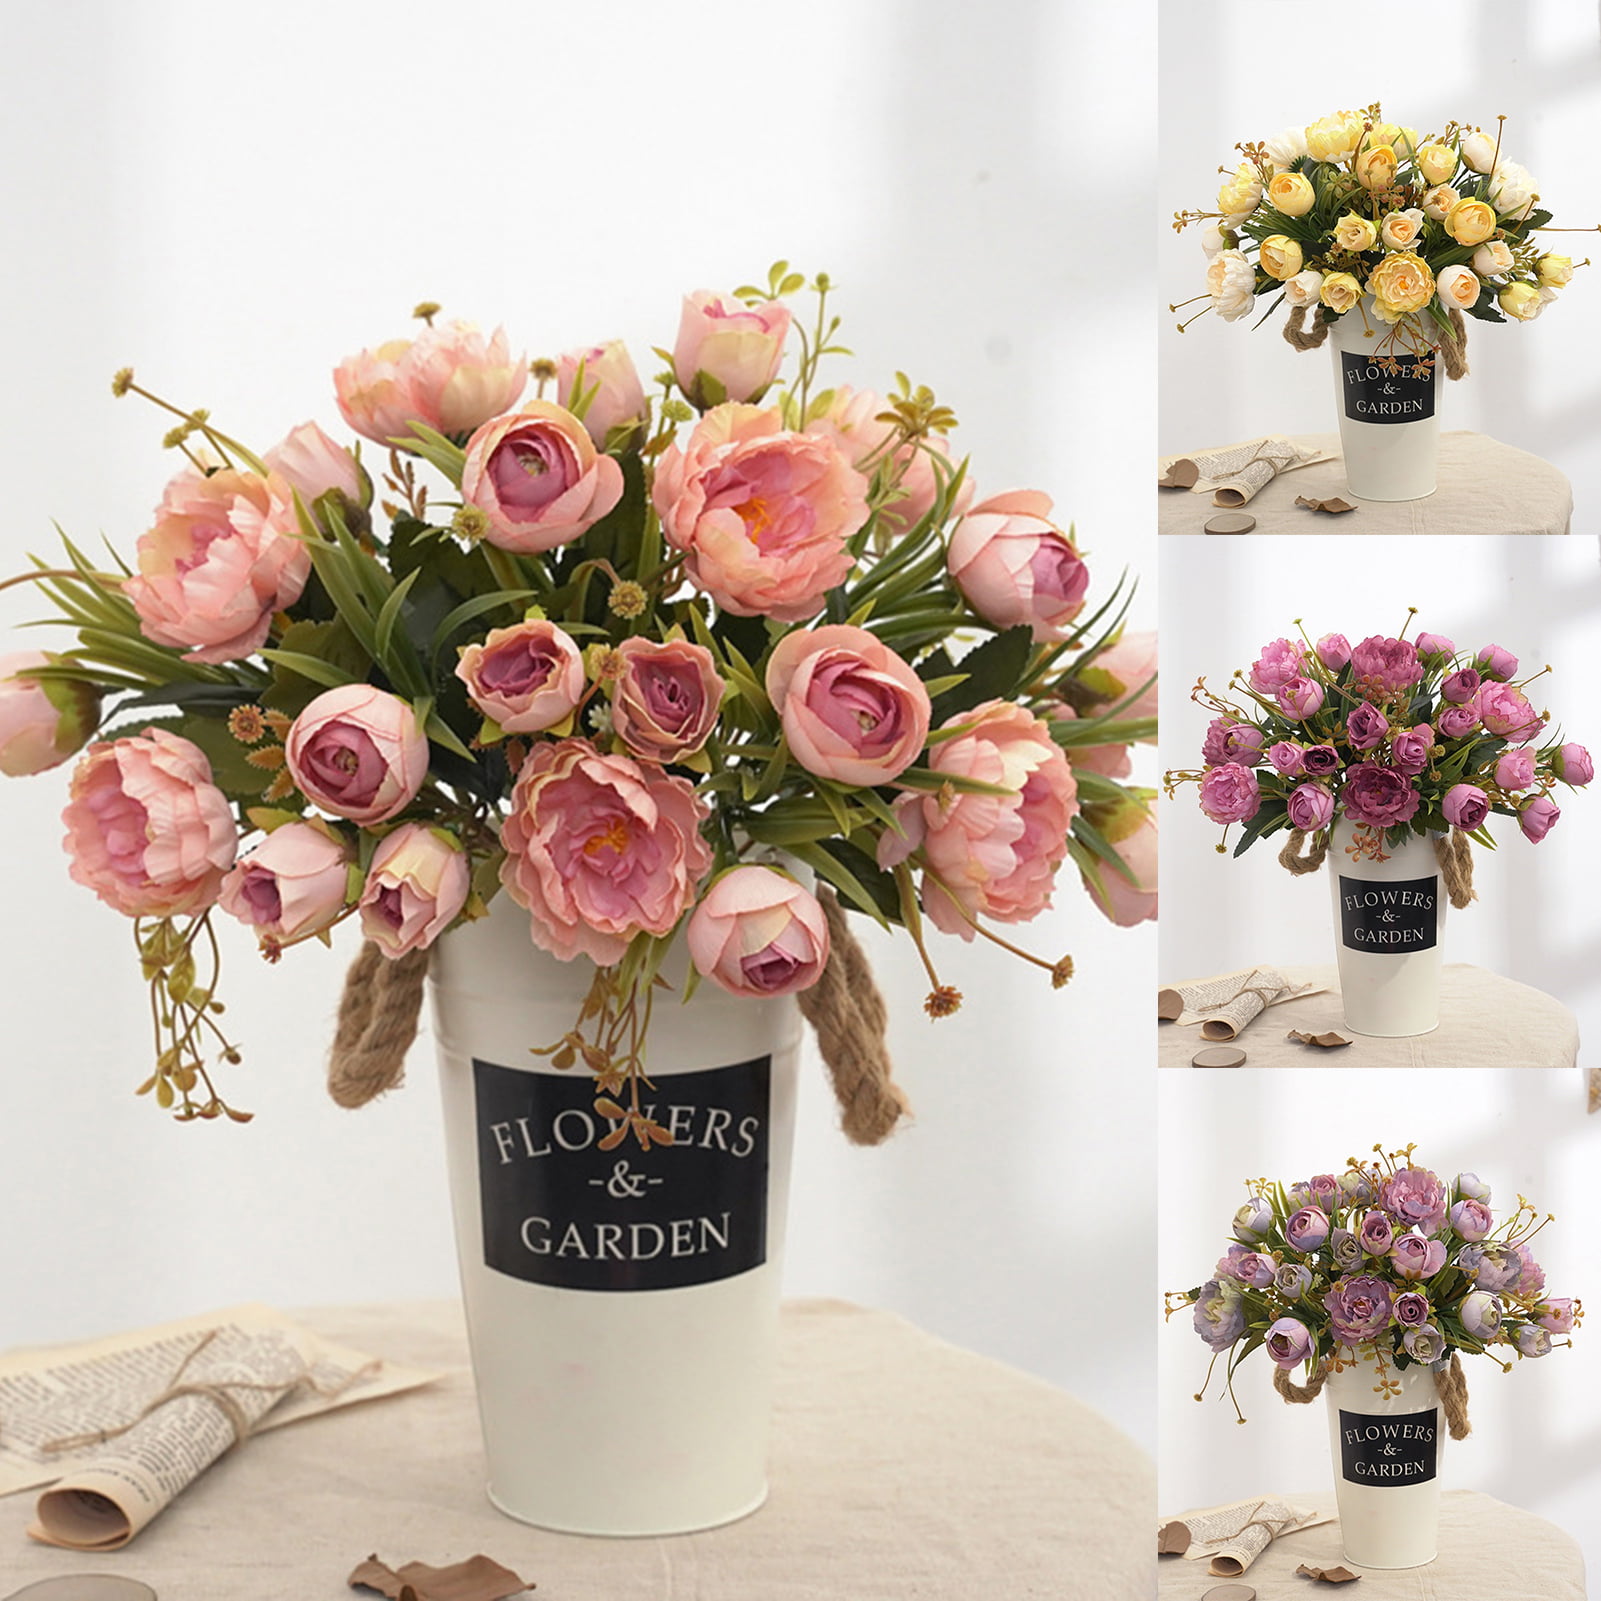 1 Bouquet  Artifical Rose Silk Flower Wedding Party Home Decoration Decor